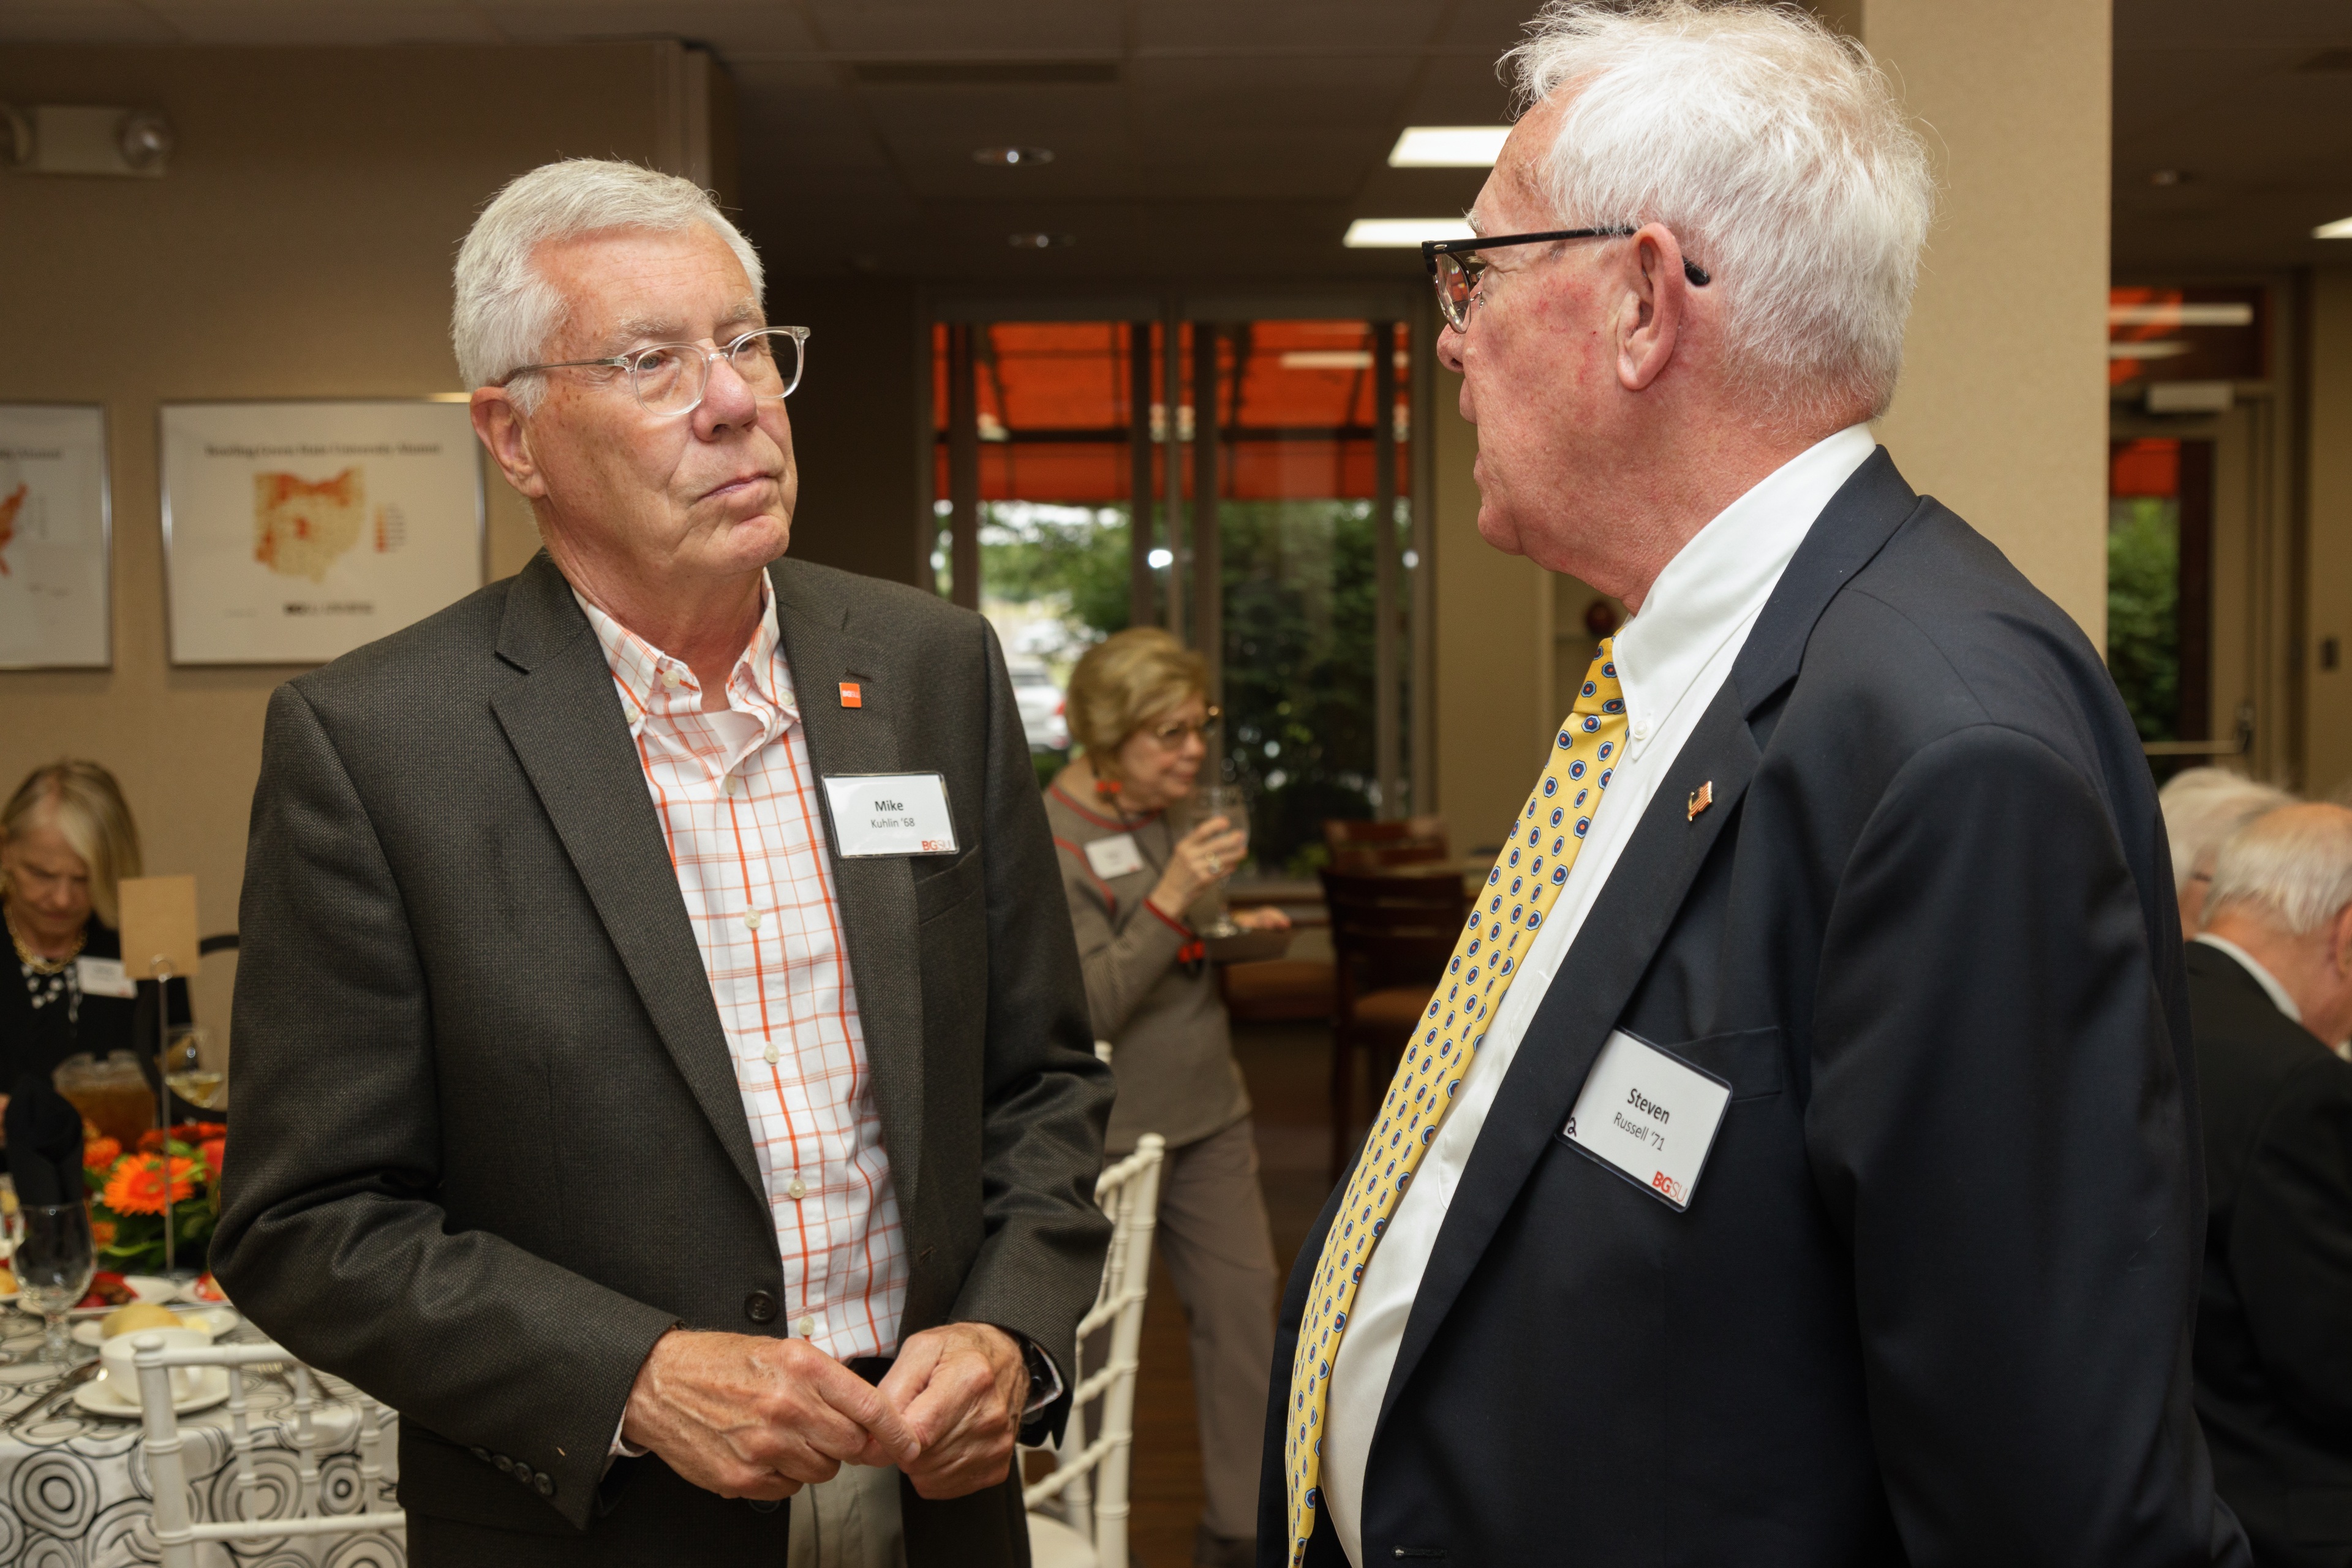 BGSU alumni Mike Kuhlin and Steven Russell talk at a reception